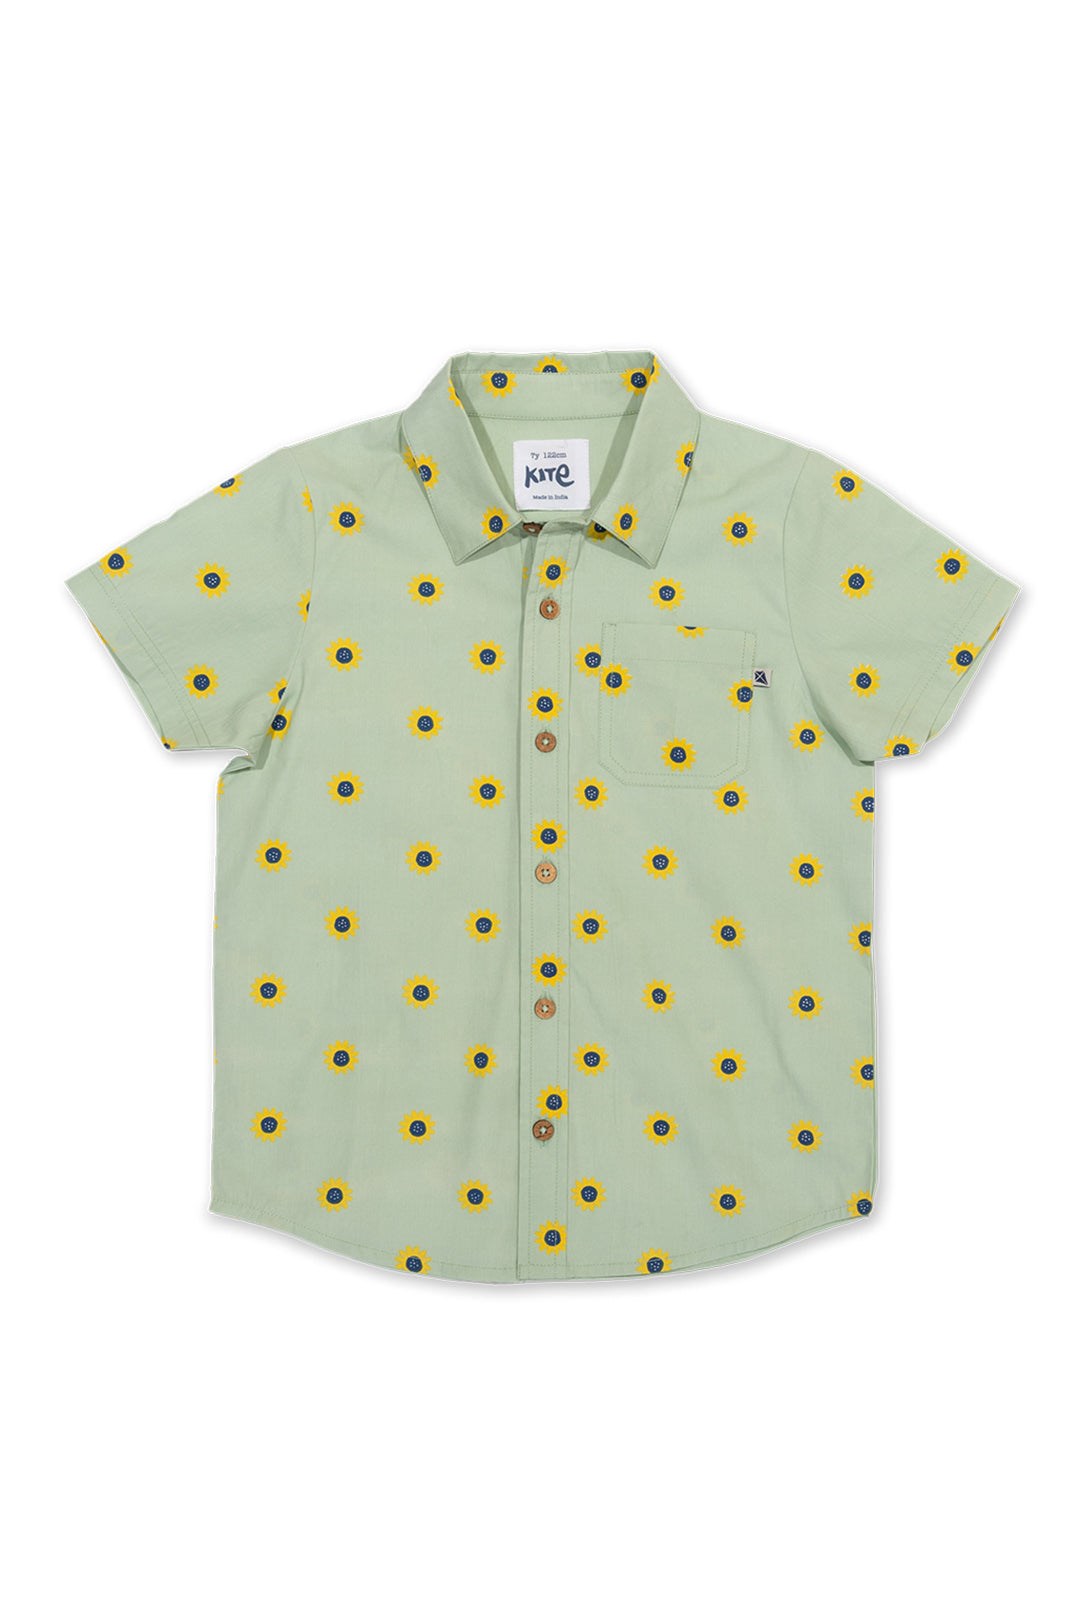 Sunflower Dot Baby/Kids Organic Cotton Shirt -